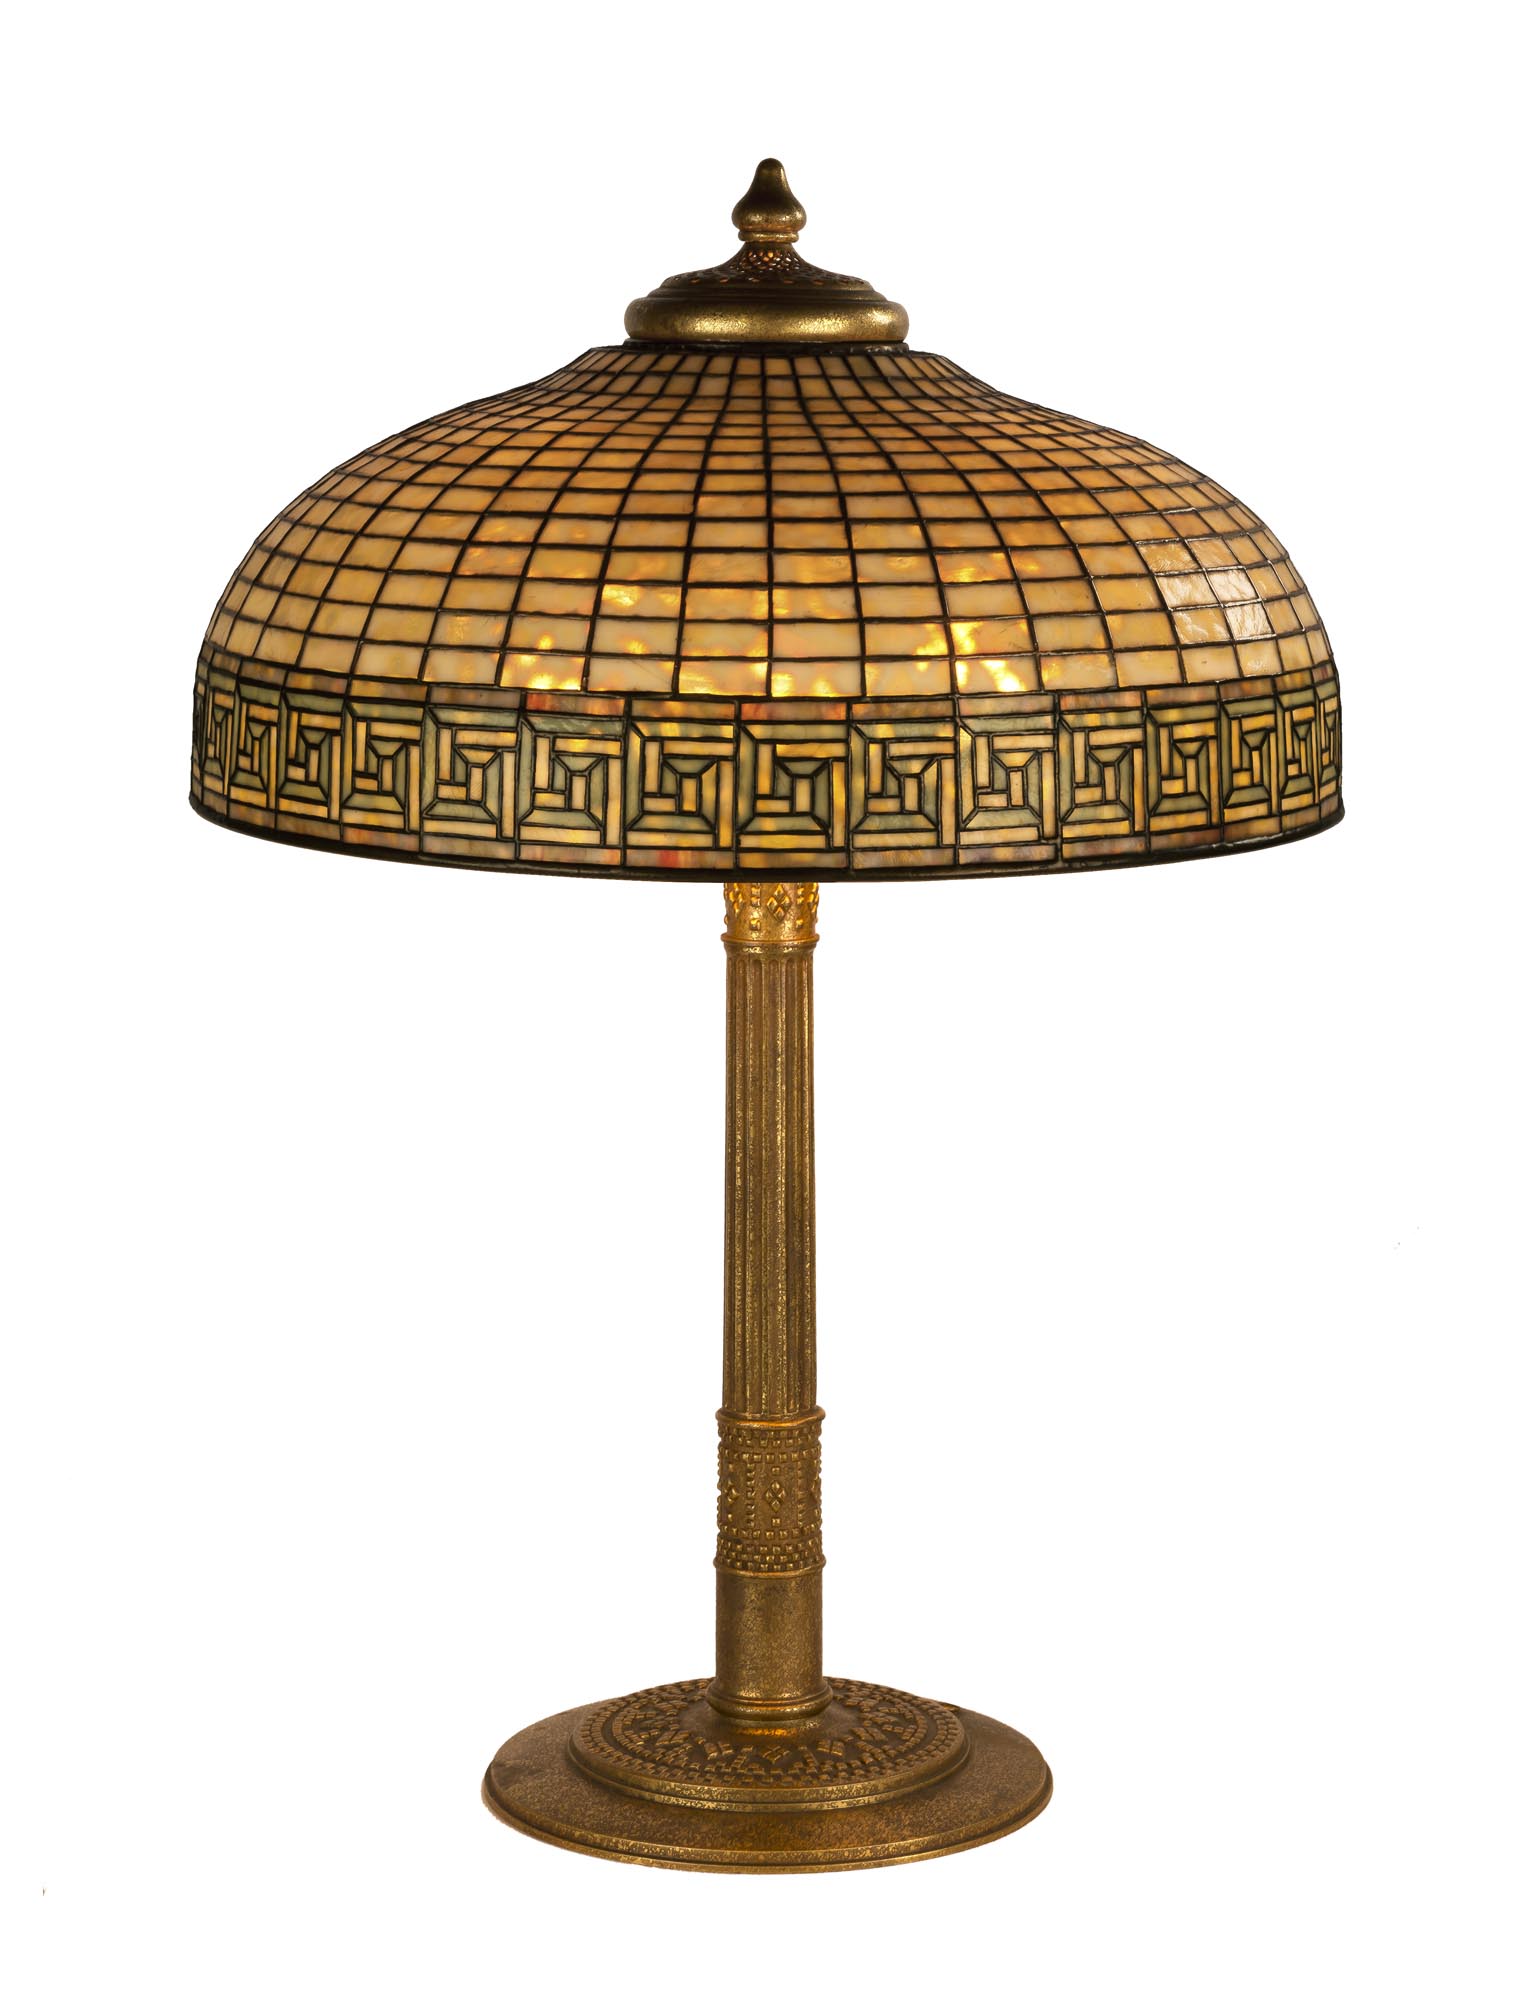 Tiffany Studios, New York, "Greek Key" Table Lamp. circa 1910. Leaded glass and gilded bronze. Shade